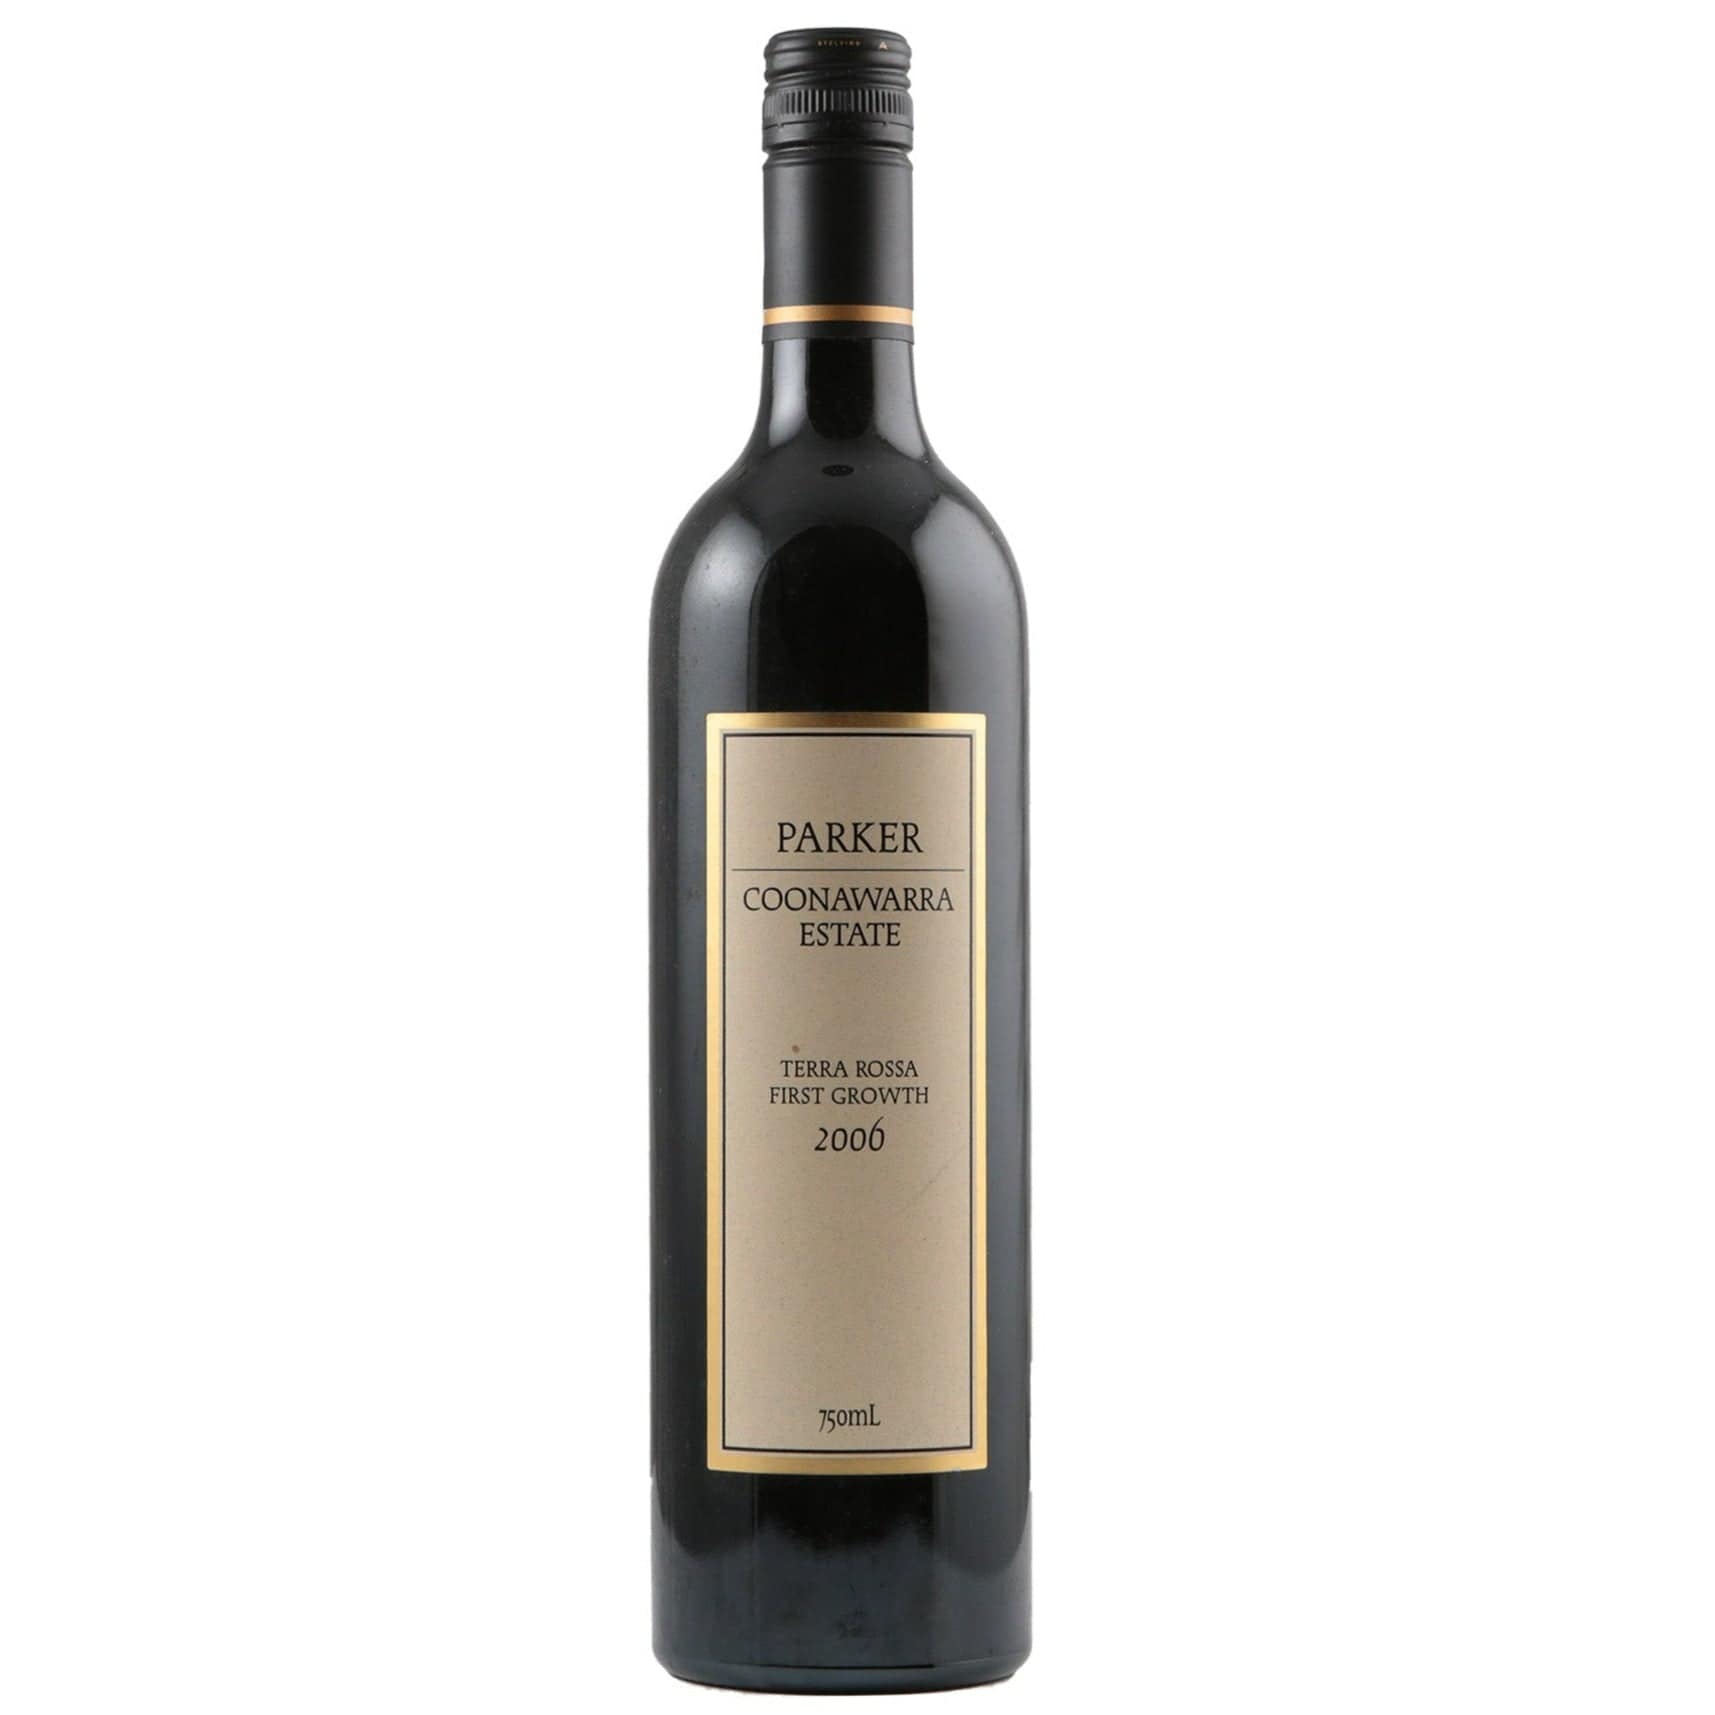 Single bottle of Red wine Parker Estate, Coonawarra First Growth Cabernet Sauvignon, 2006 85% Cabernet Sauvignon, 15% Merlot